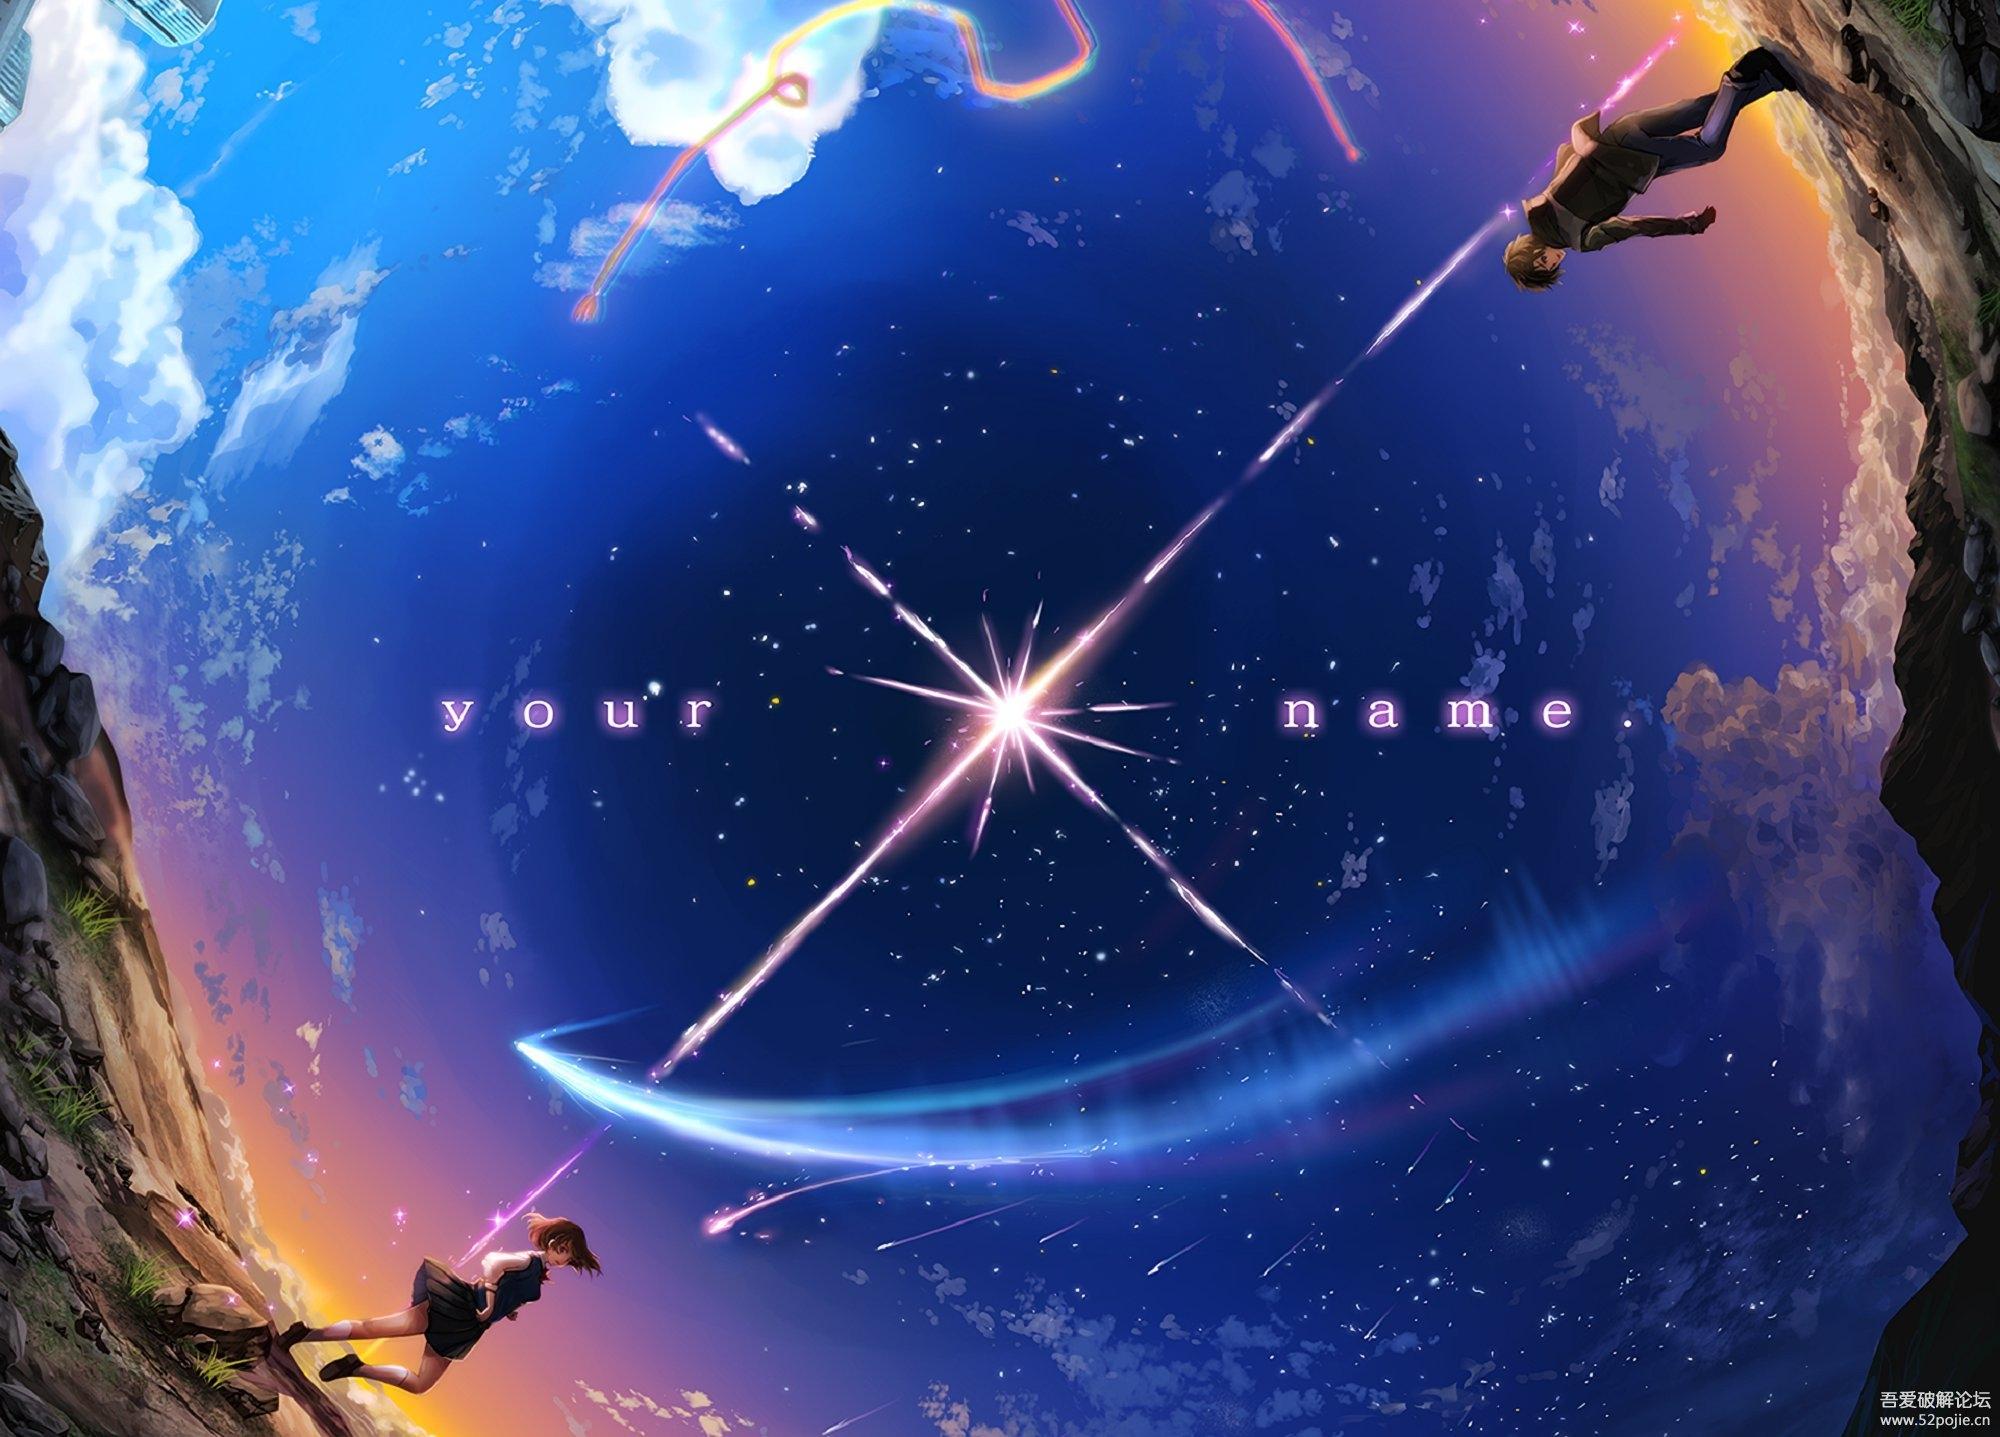 anime wallpaper iphone,himmel,platz,atmosphäre,astronomisches objekt,weltraum